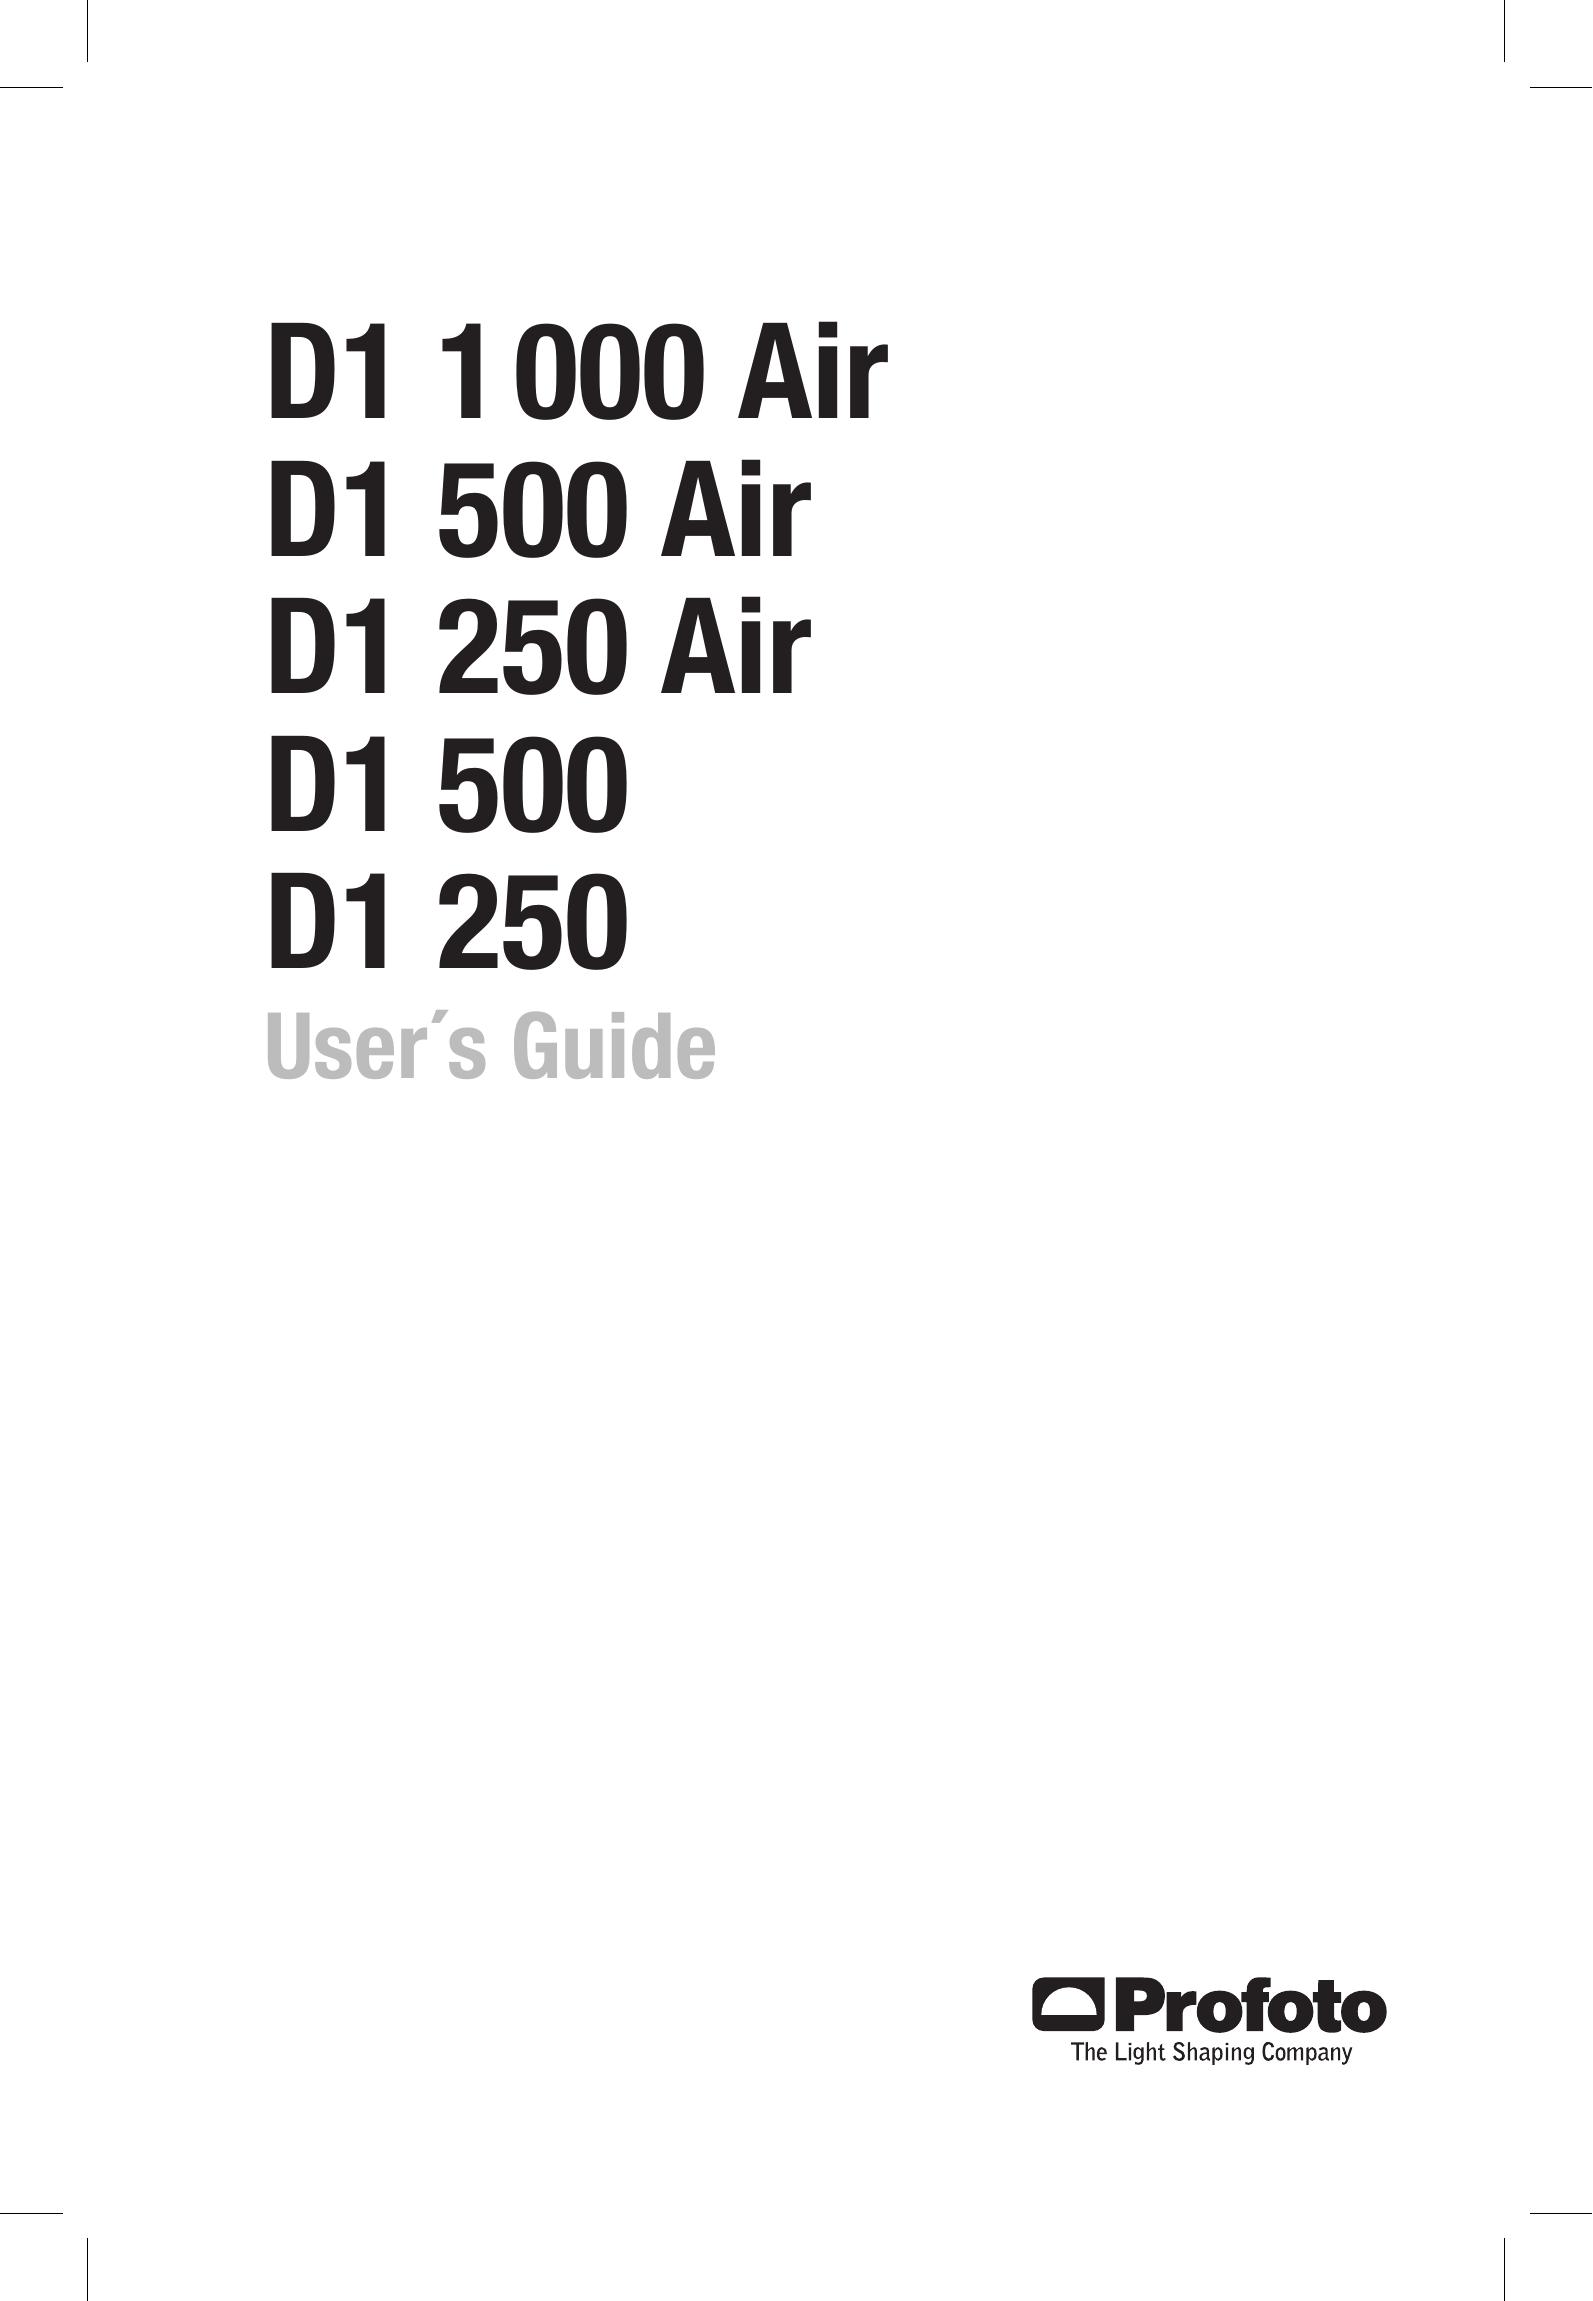 Profoto D1 250 Camera Accessories User Manual